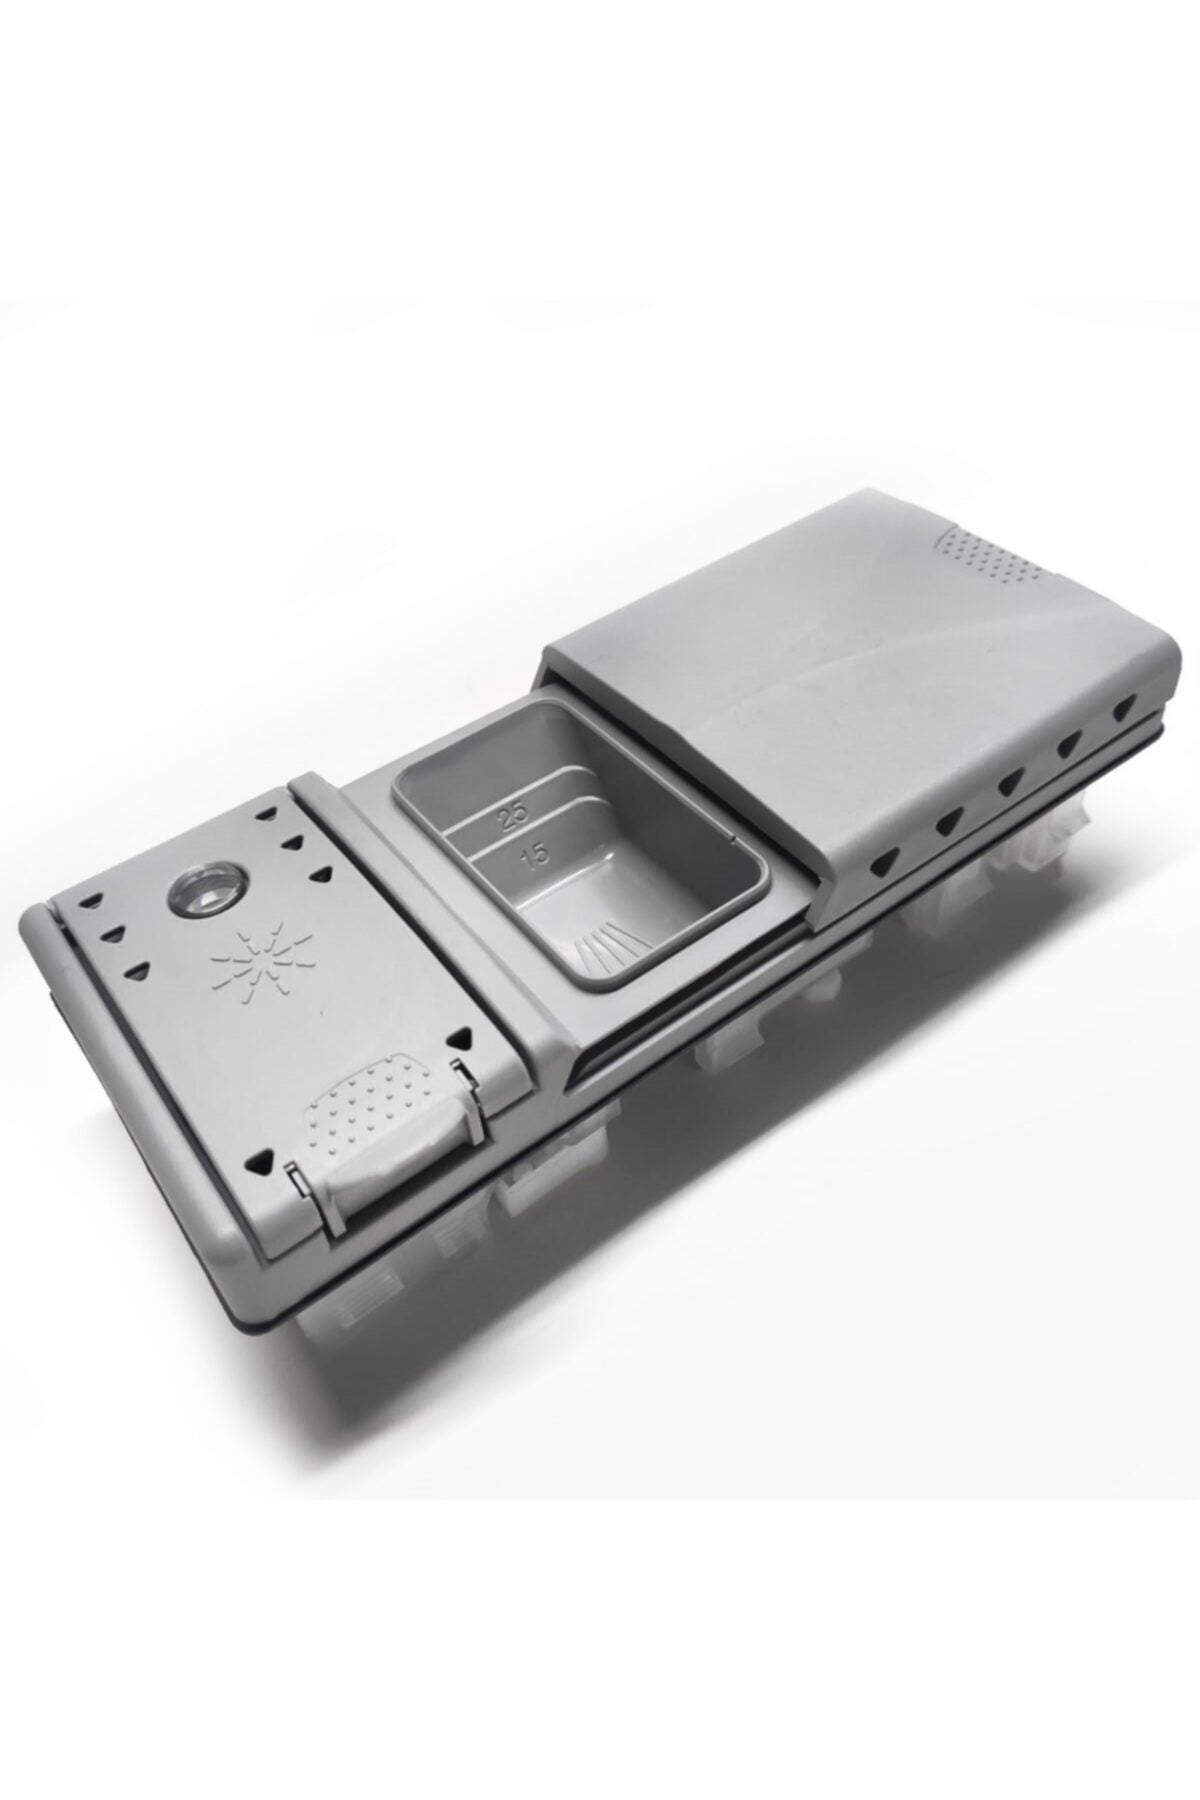 Dishwasher Detergent Dispenser Assembly Lock Tablets Storage Box Holder Spare Part Accessory BOSCH SIEMENS PROFILO 00490467